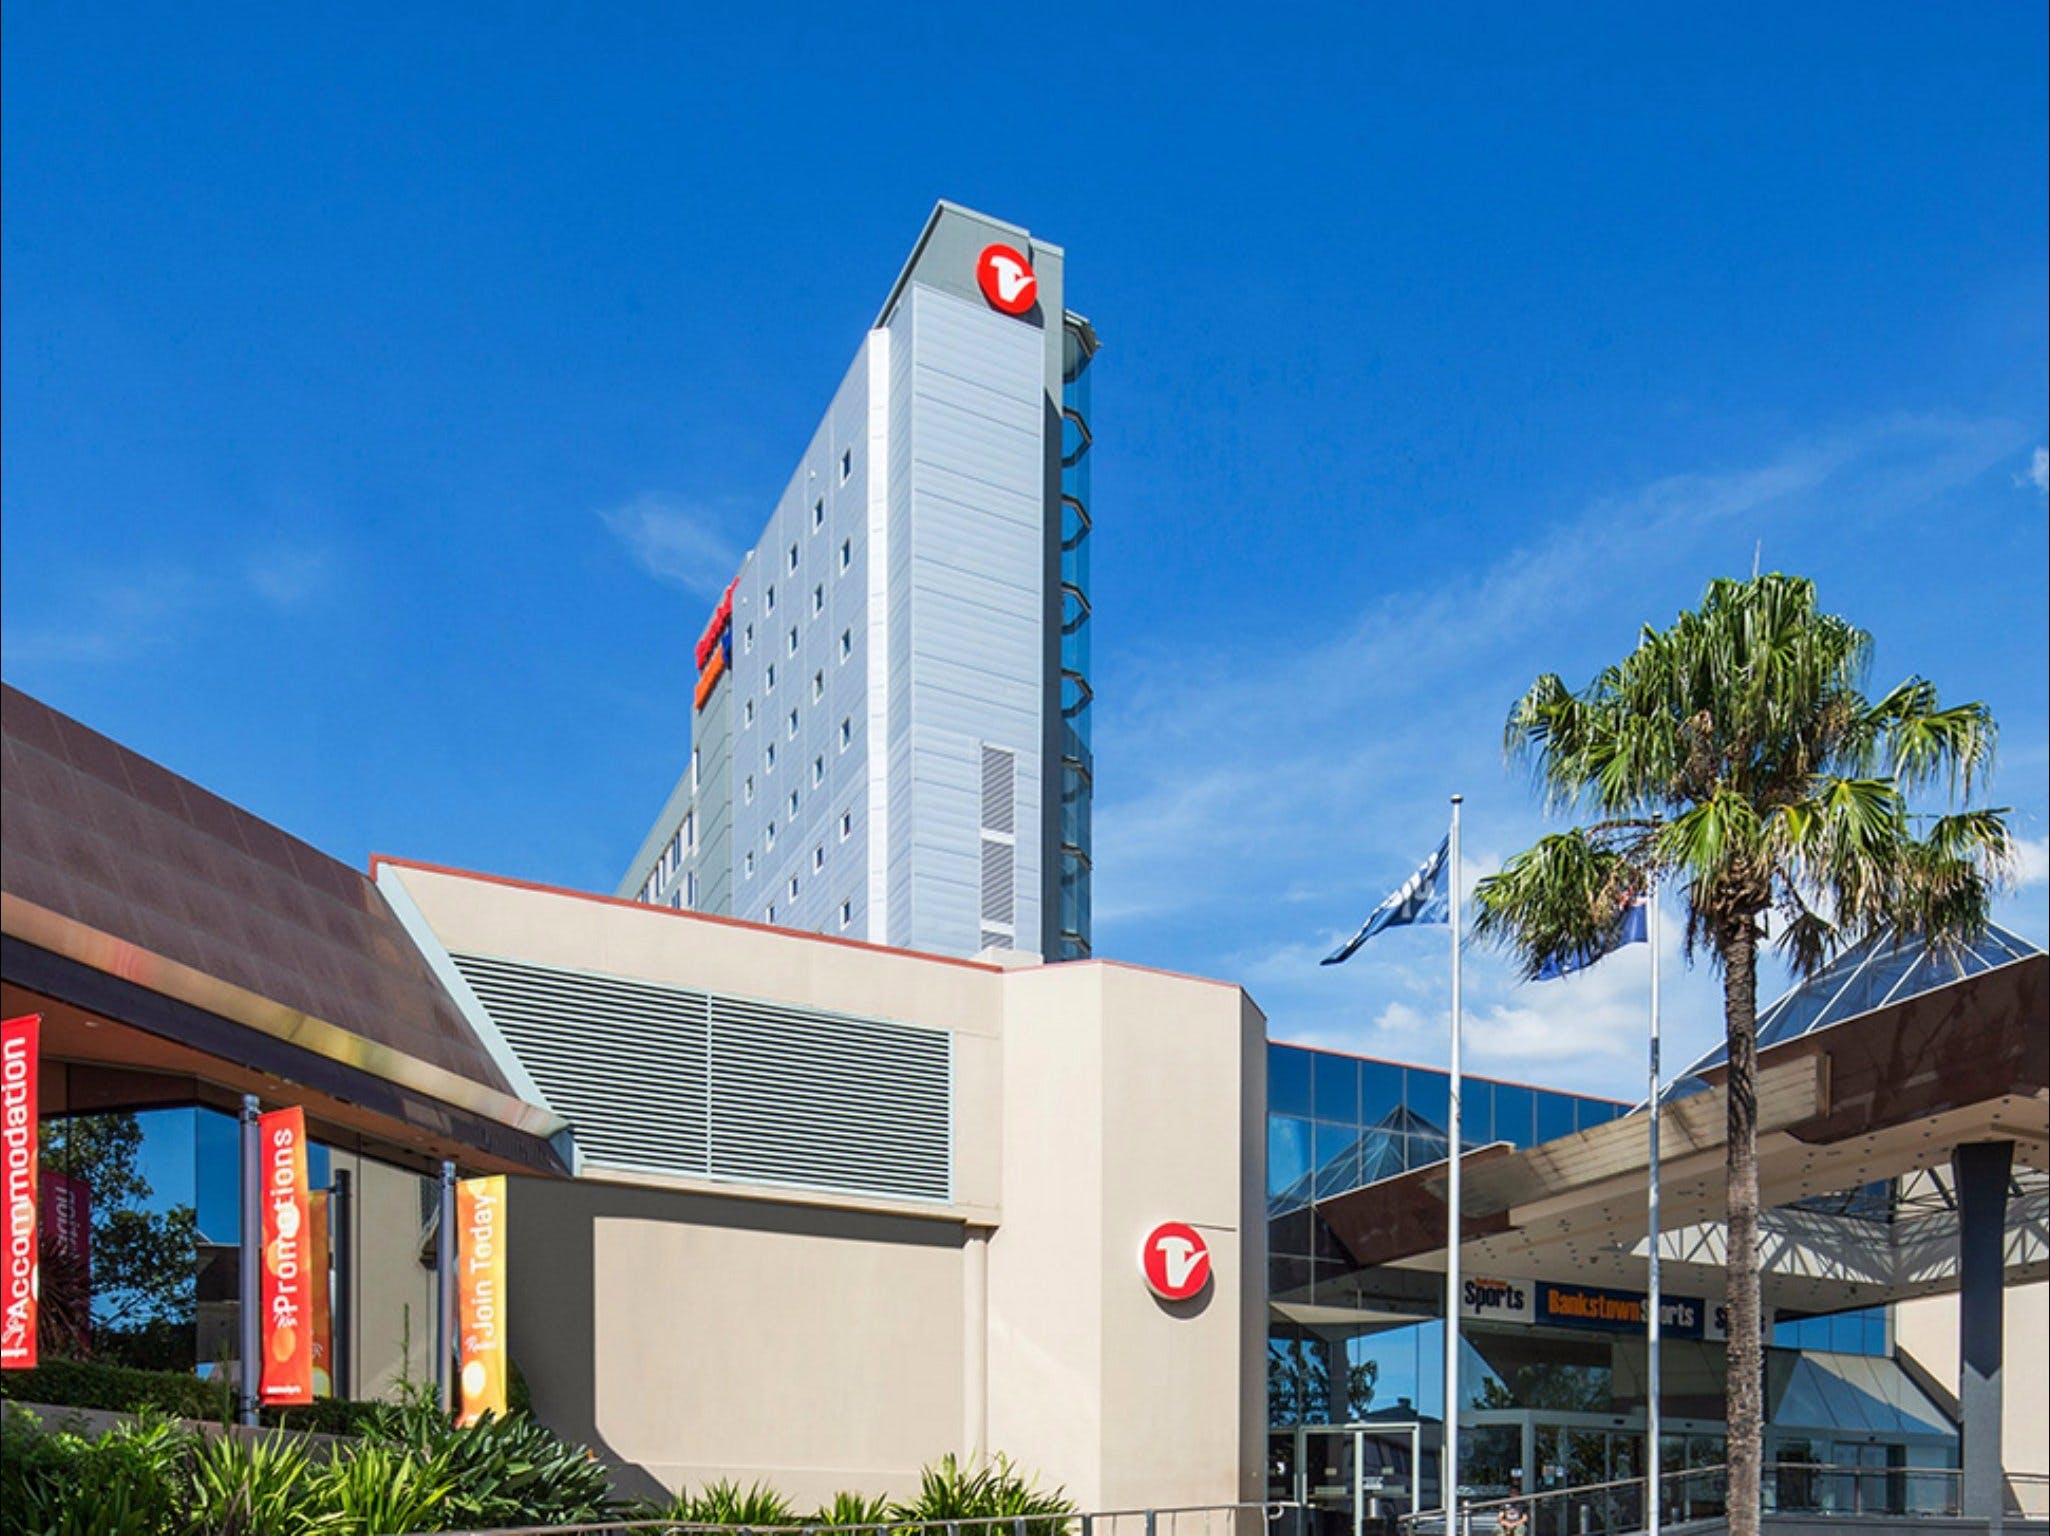 Travelodge Hotel Bankstown Sydney - Tourism Brisbane